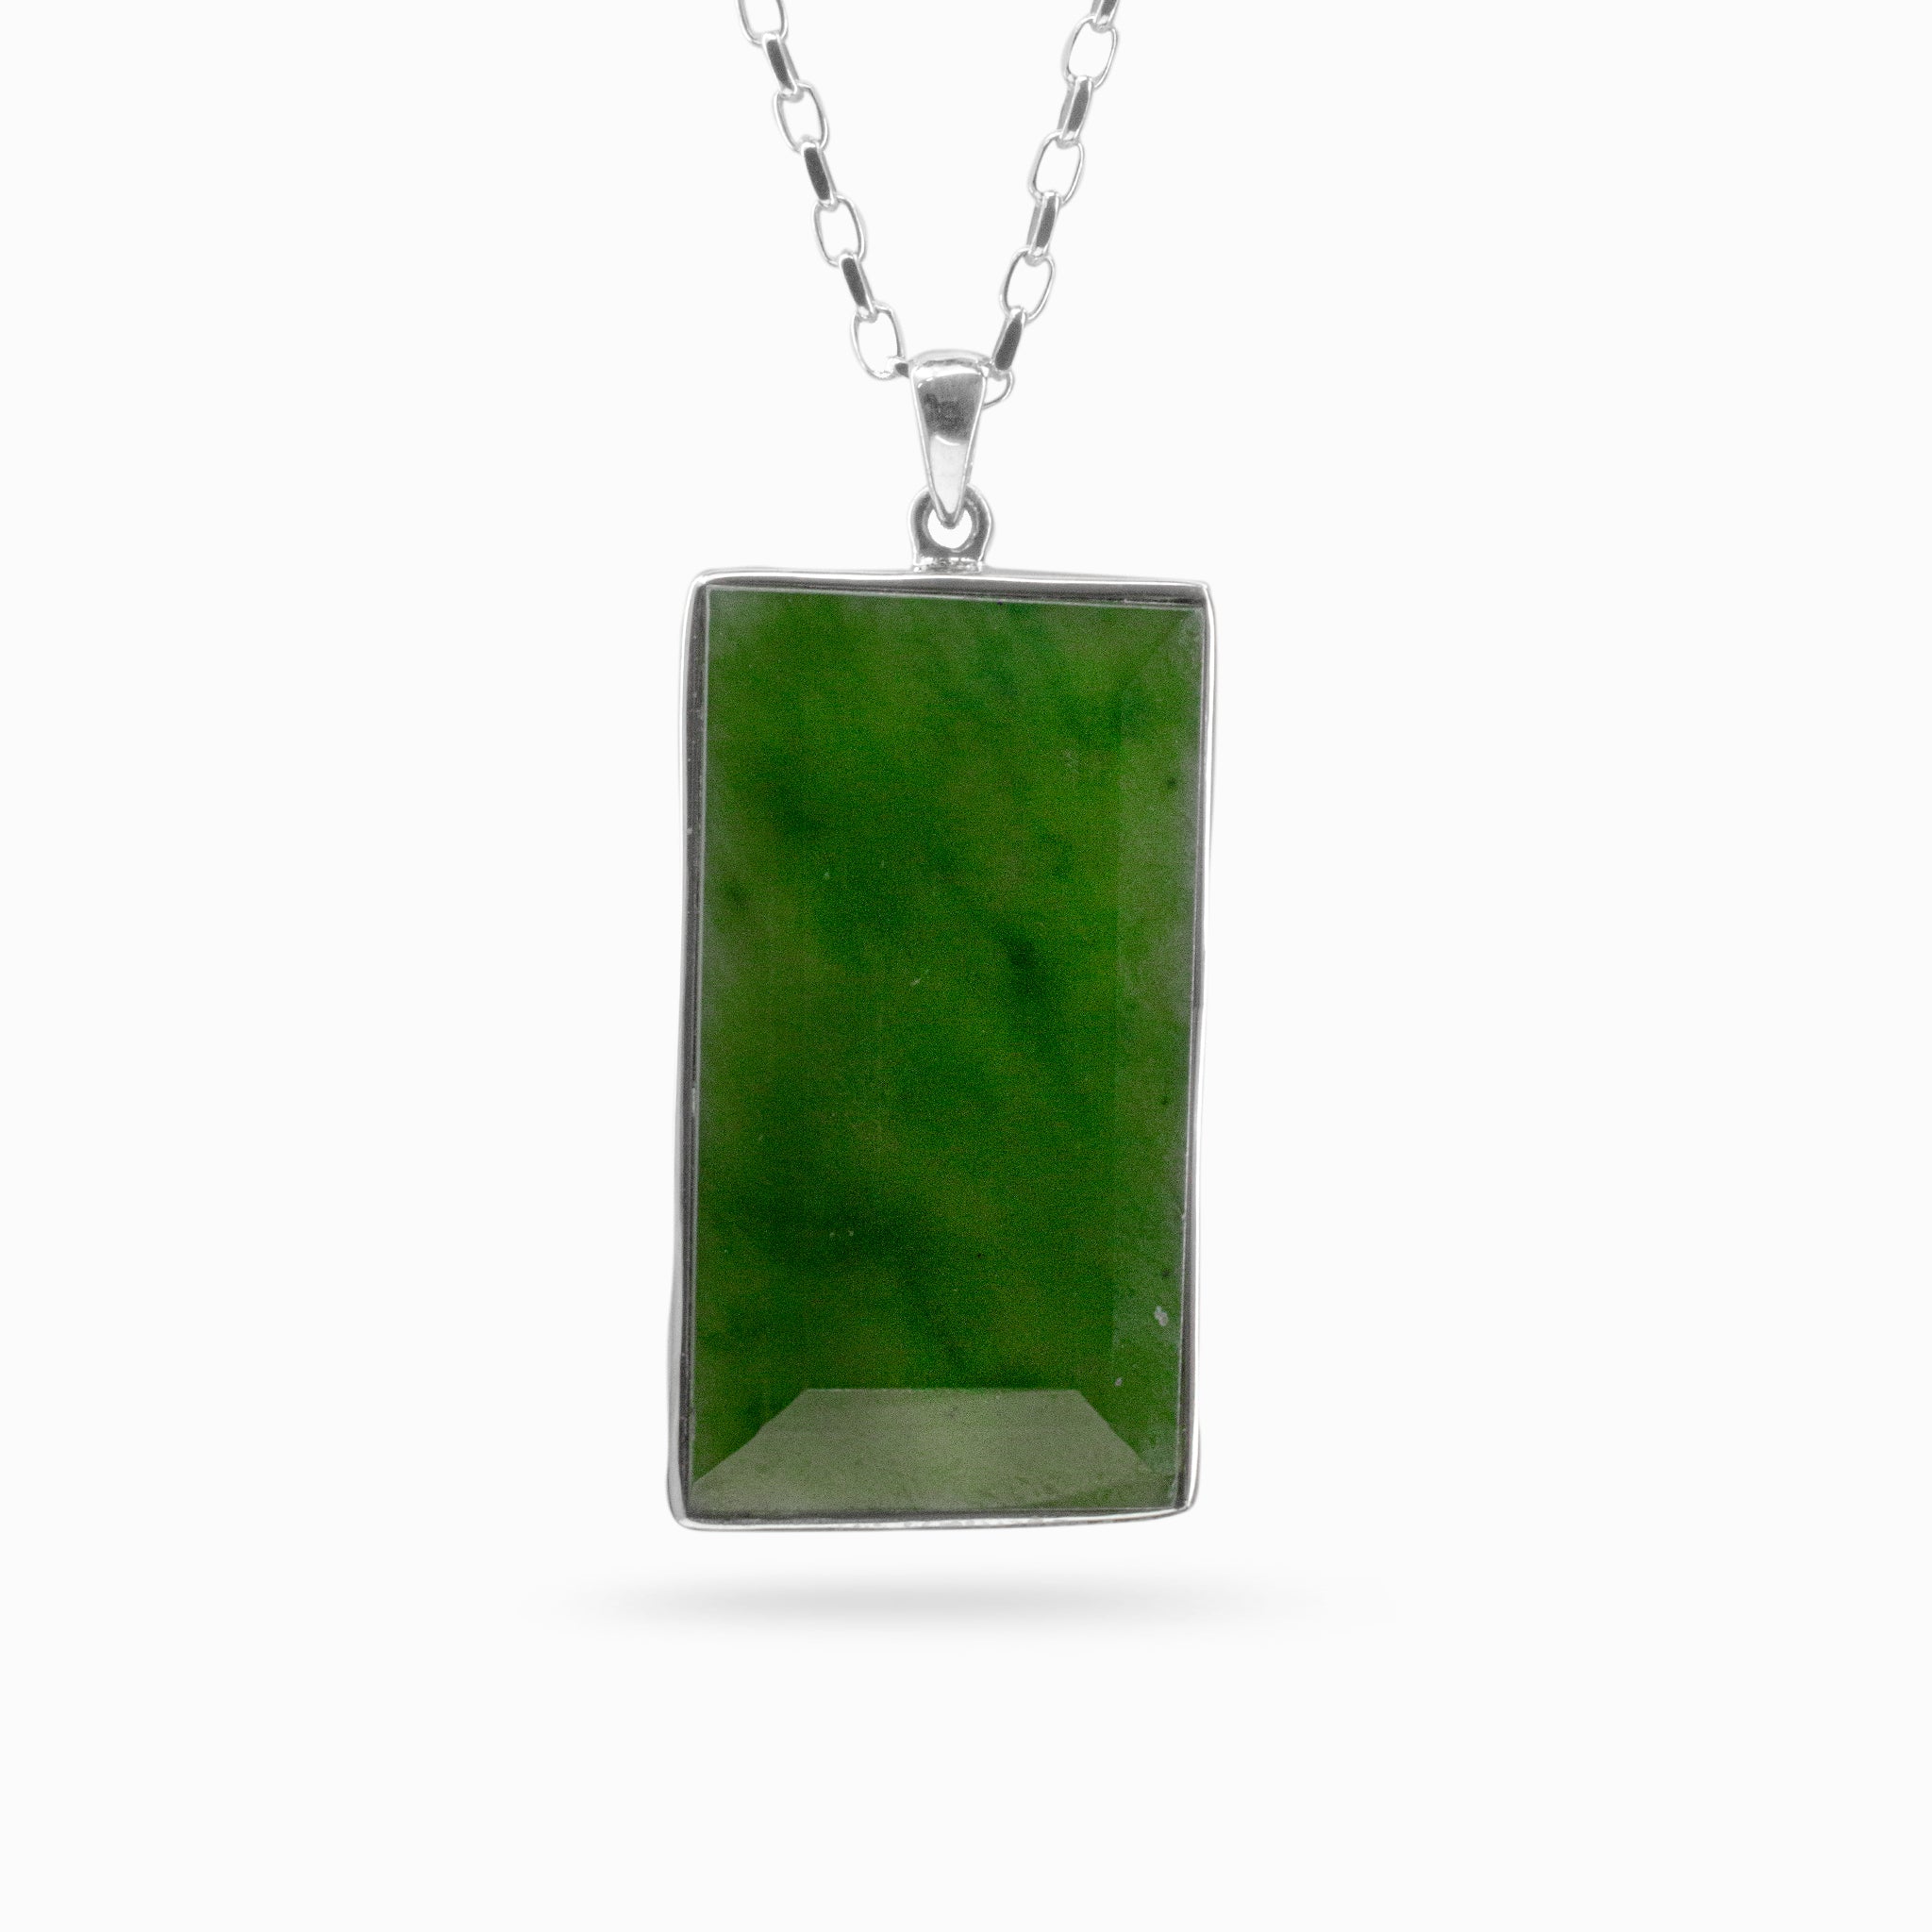 Nephrite jade necklace